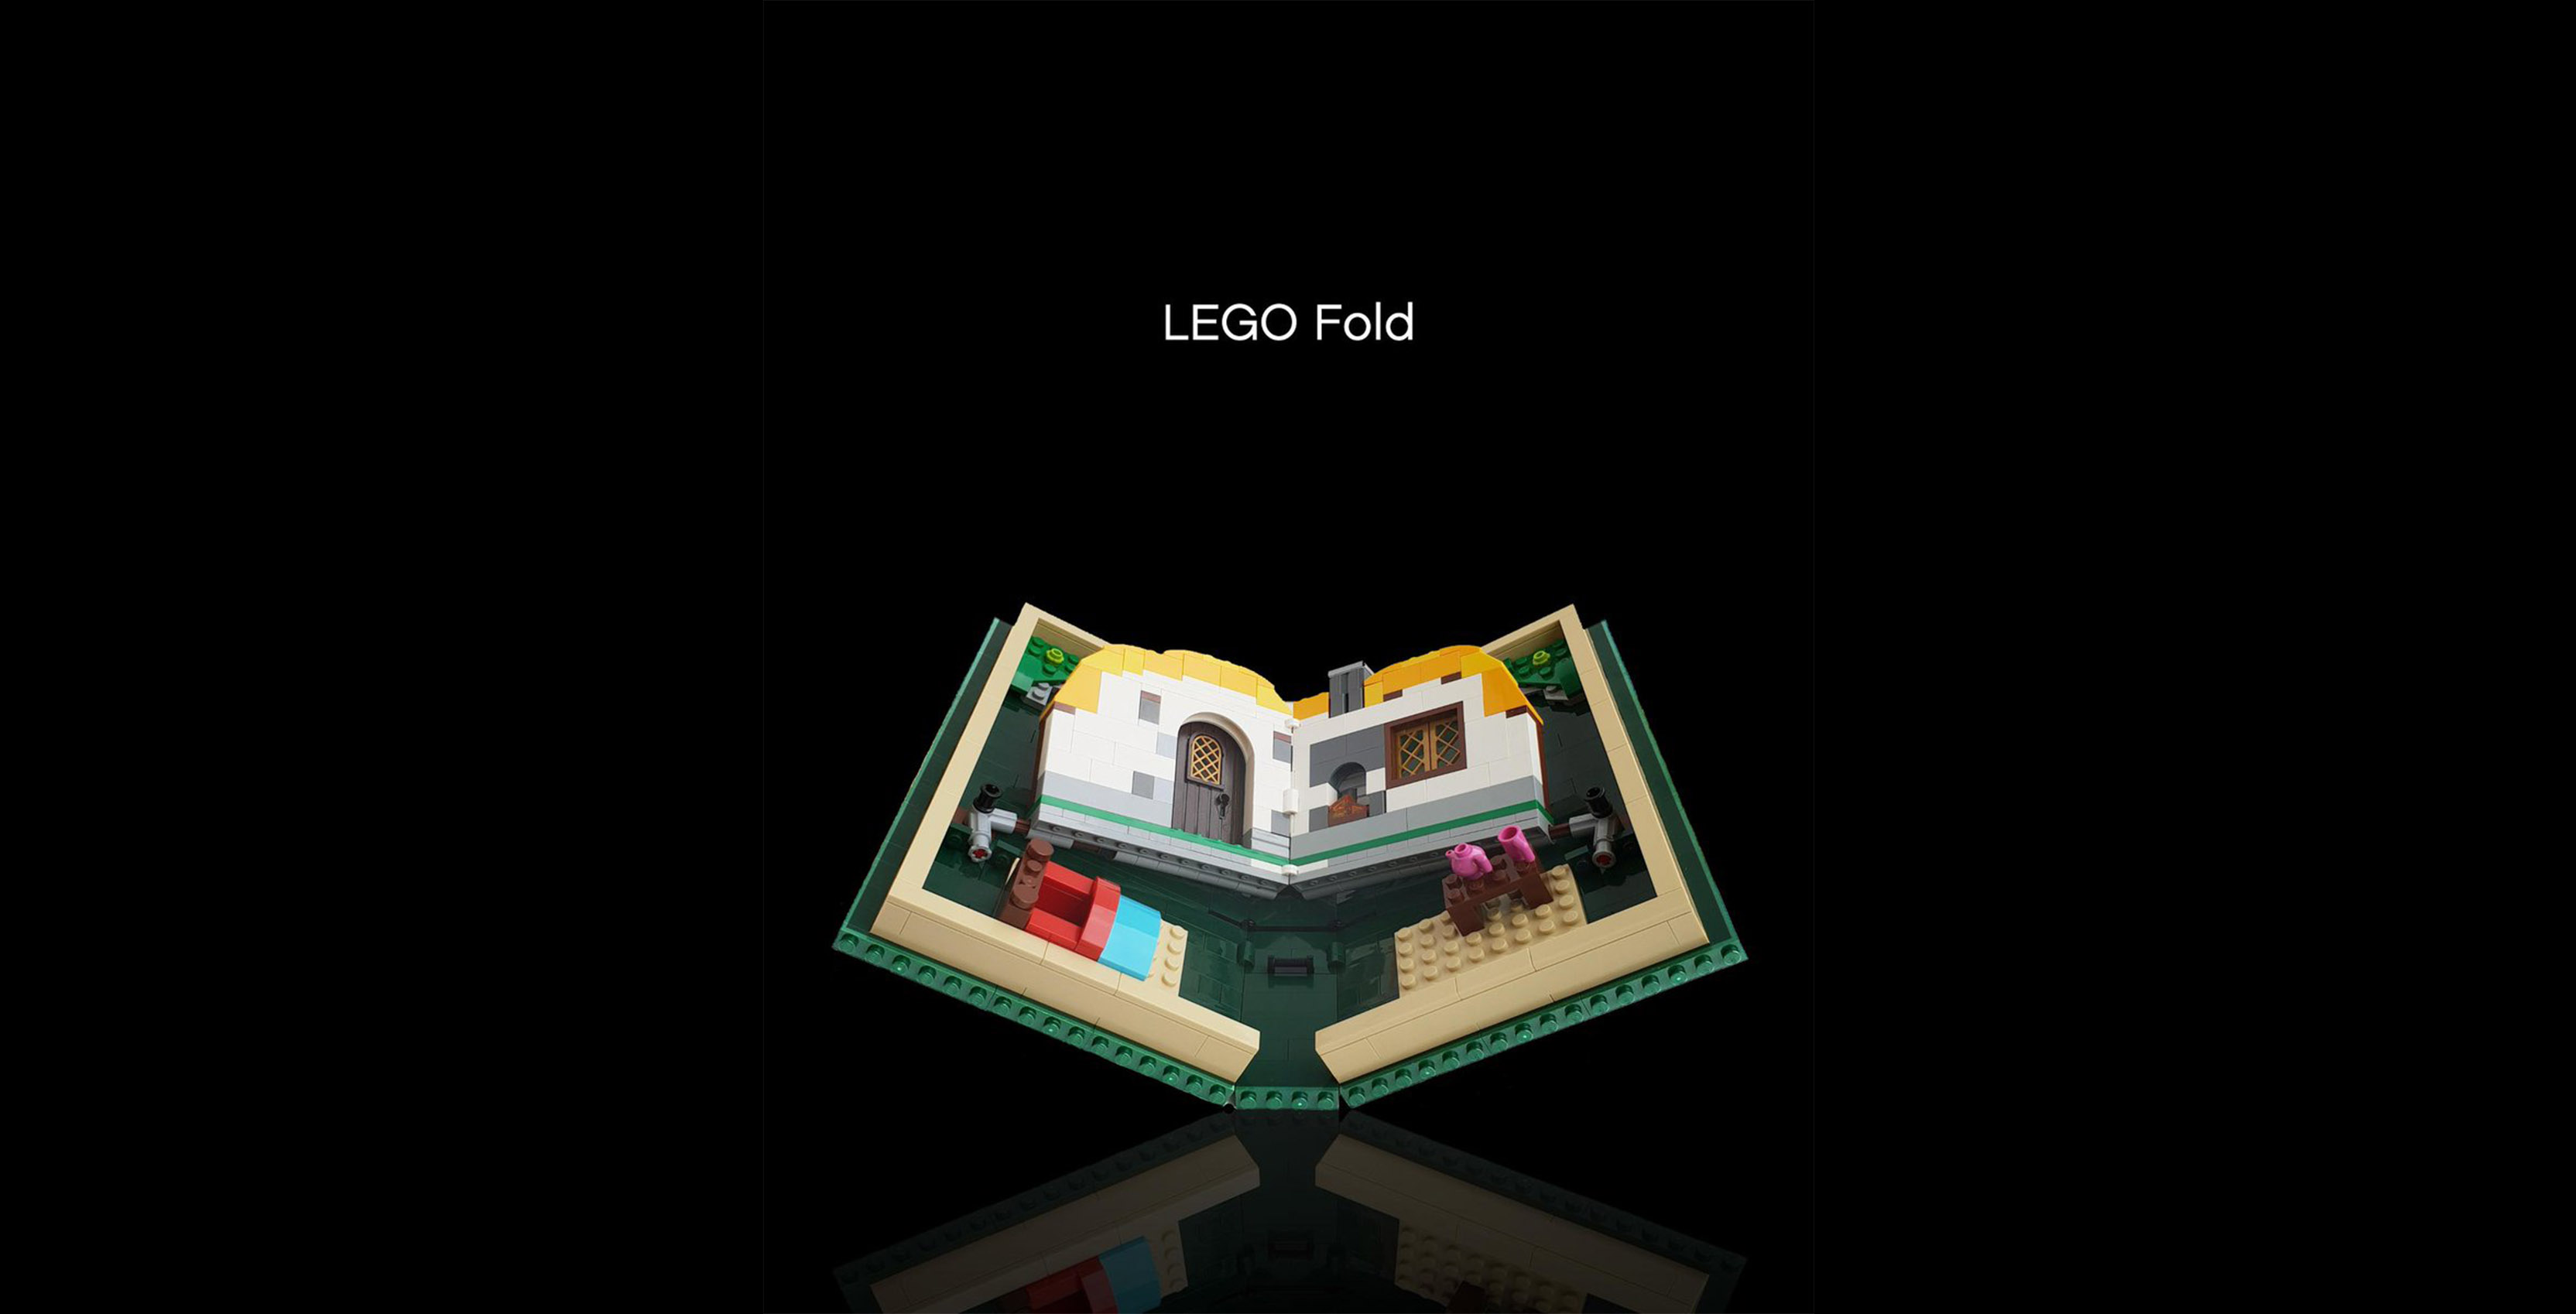 Lego Fold